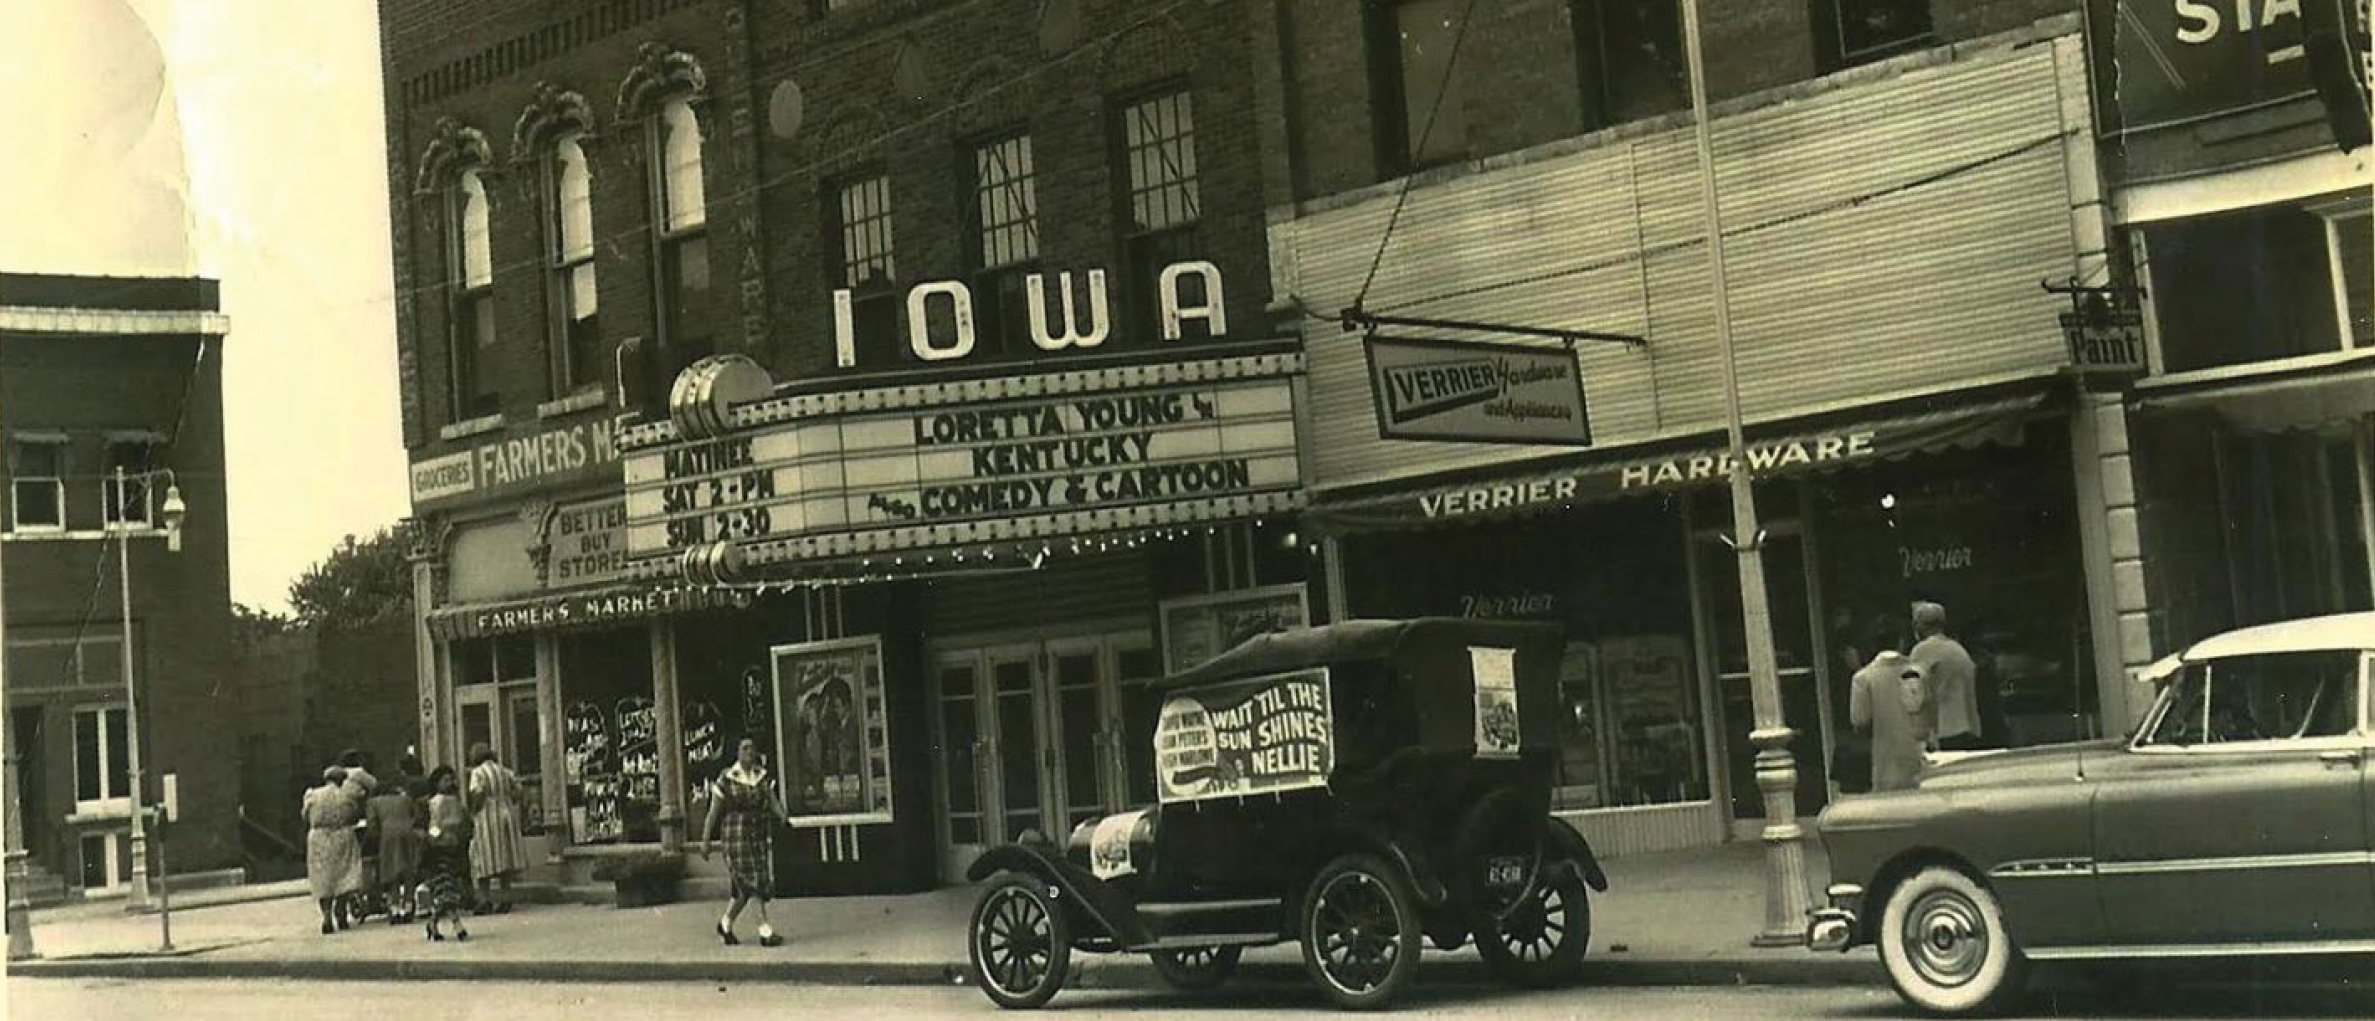 The Iowa Theater History